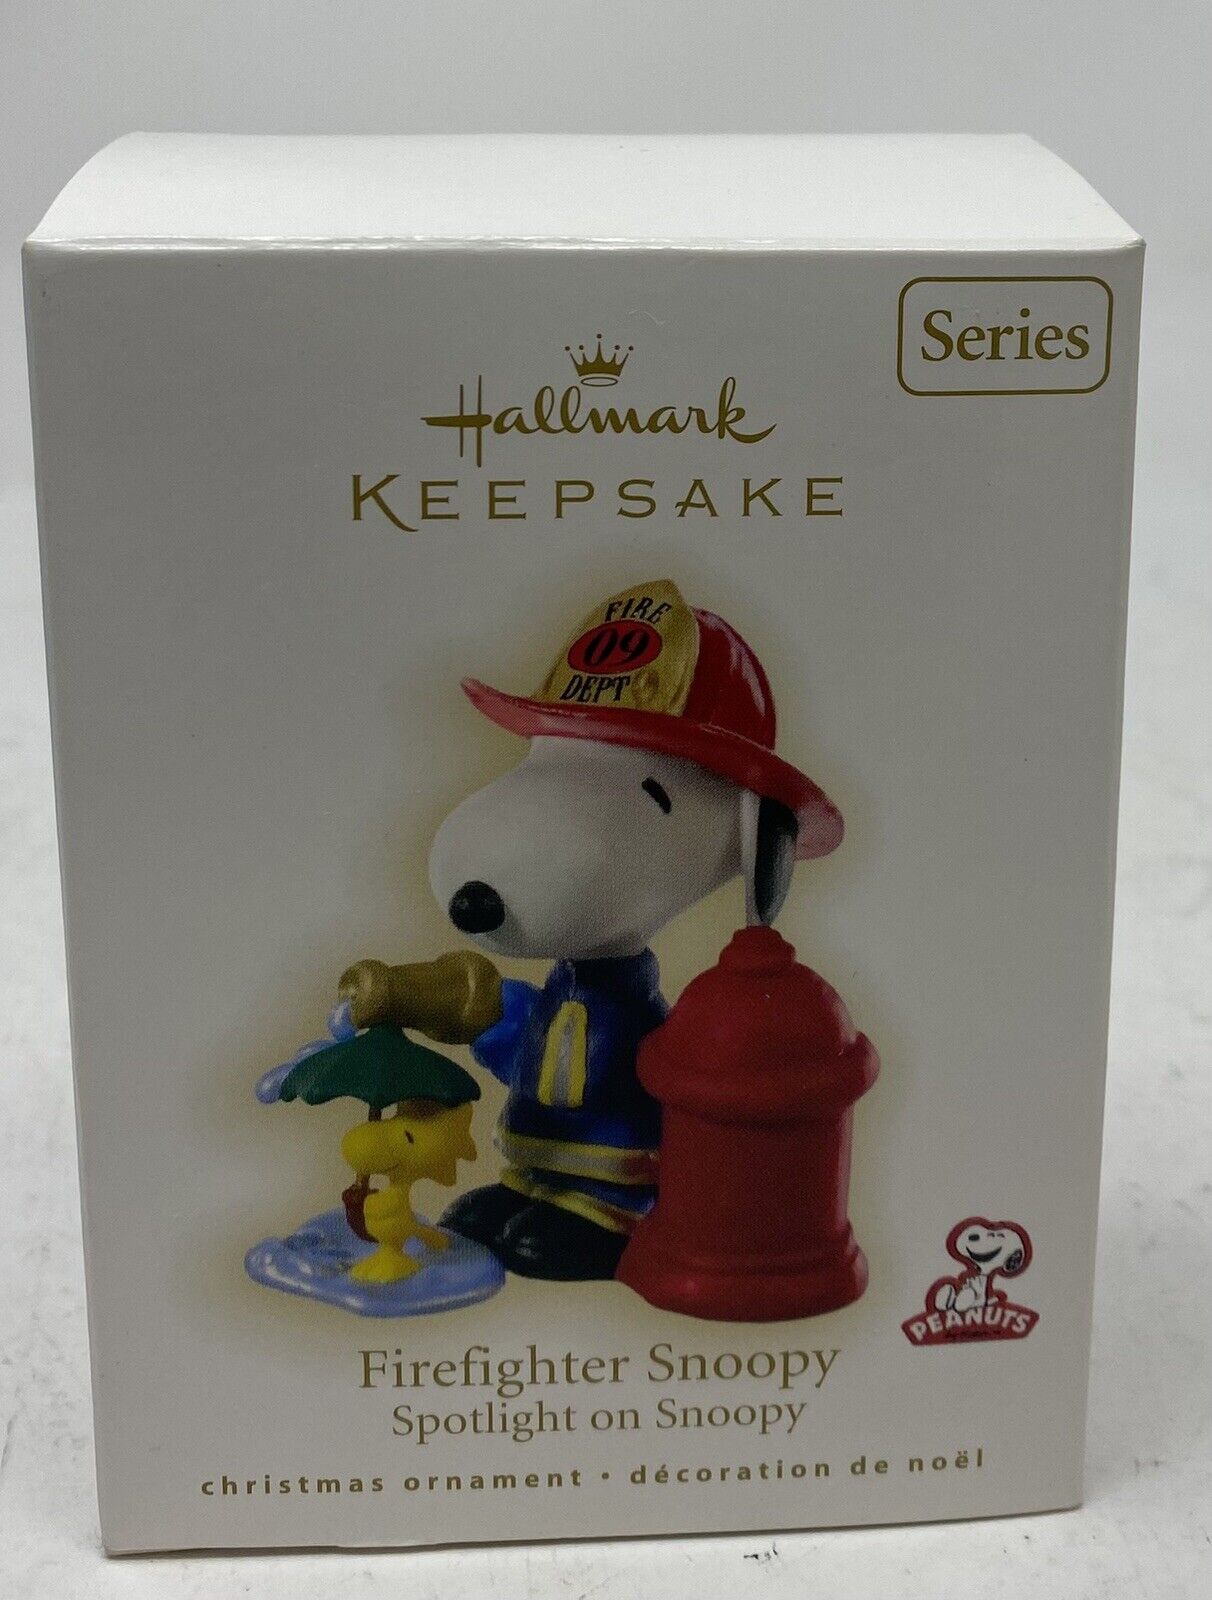 Hallmark Keepsake Firefighter Snoopy Ornament Christmas 2009 w/Woodstock